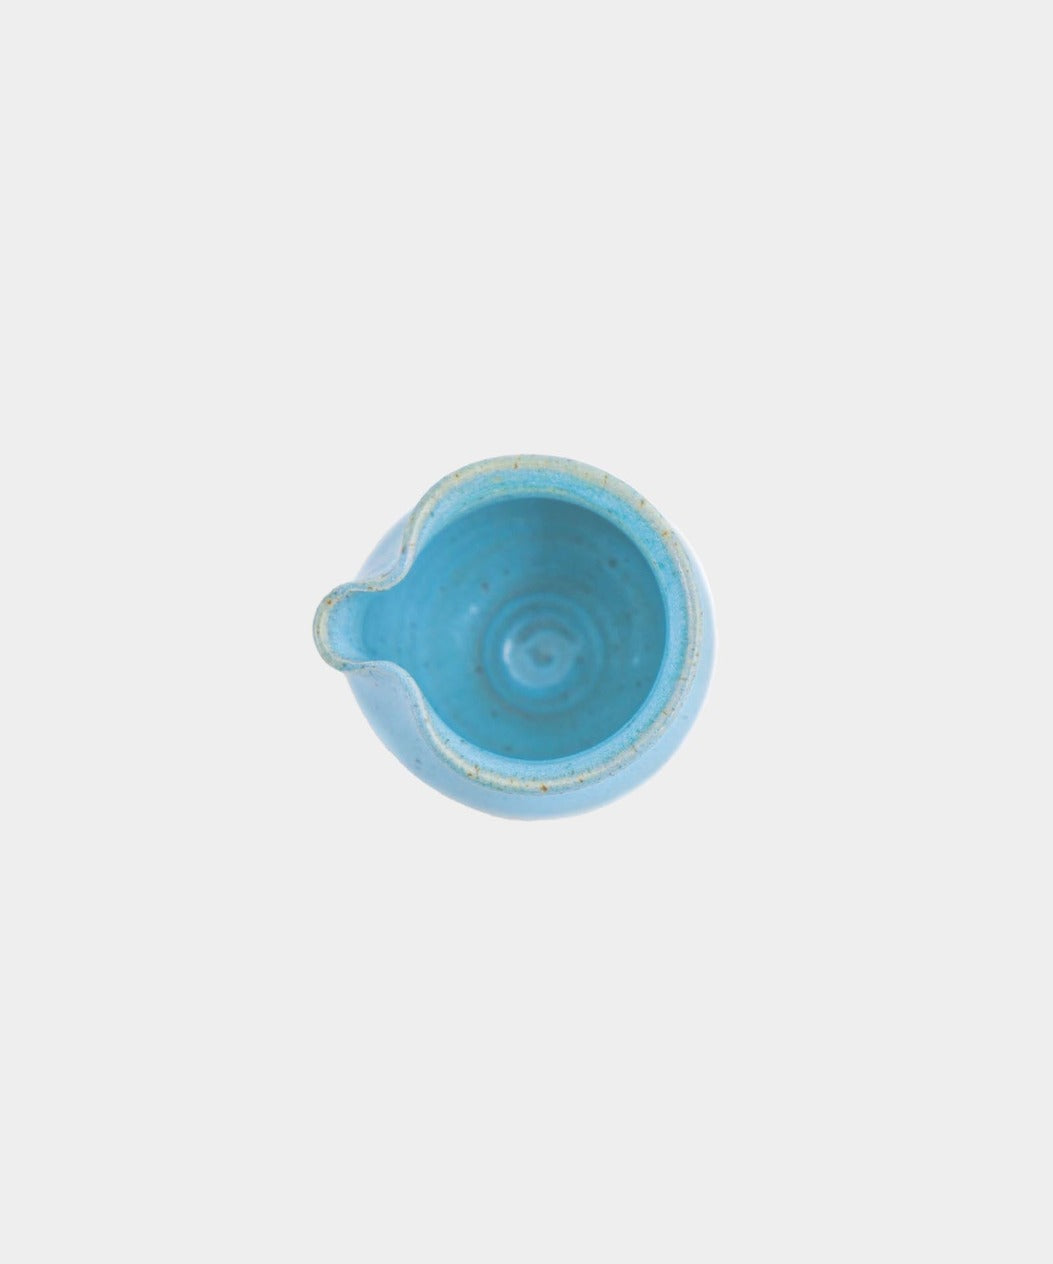 Håndlavet Keramik Flødekande | SKY by Vang | Kerama 1